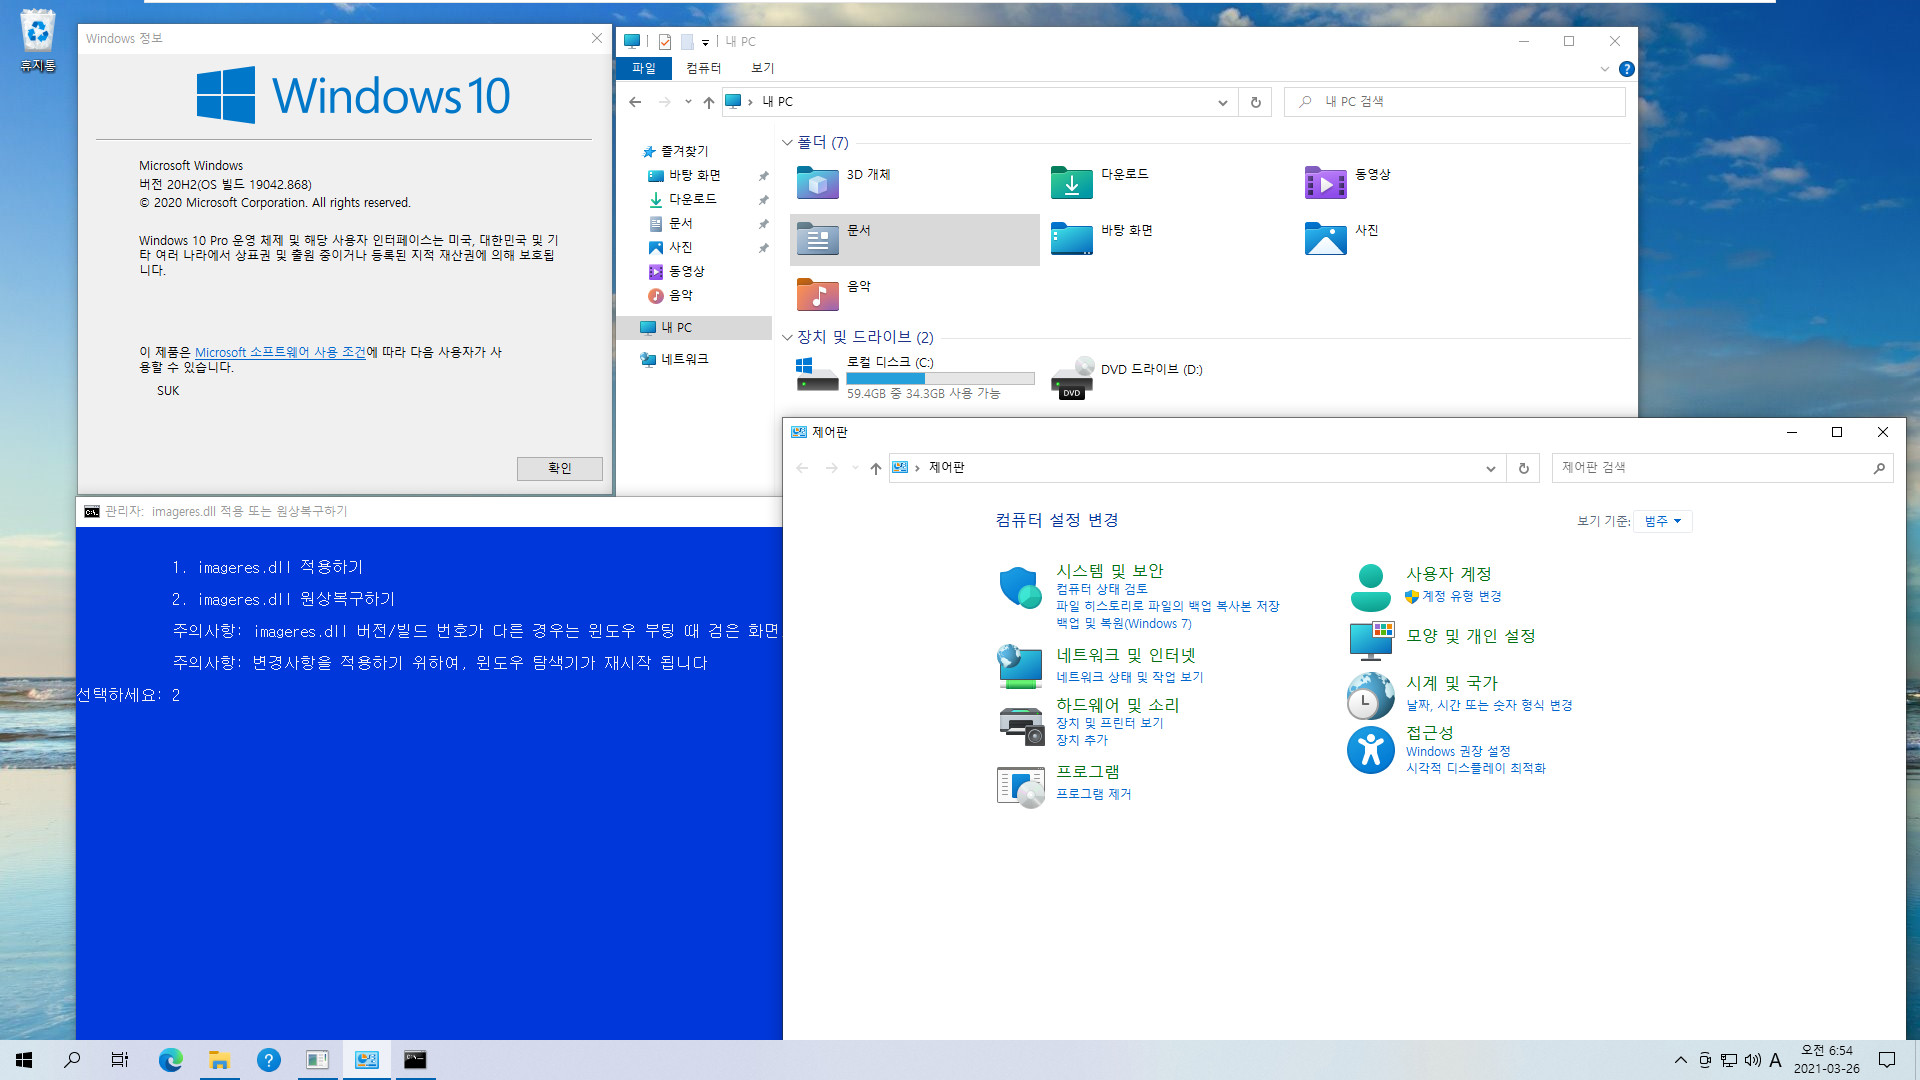 imageres.dll적용하기3 - nsudo.bat 테스트 - Windows 10 인사이더 프리뷰, 버전 21H2 추정, 빌드 21343.1000, PRO x64의 아이콘 적용하기 - 버전 21H1, 버전 20H2와 버전 2004까지 32비트 윈도우도 적용됩니다 2021-03-26_065420.jpg